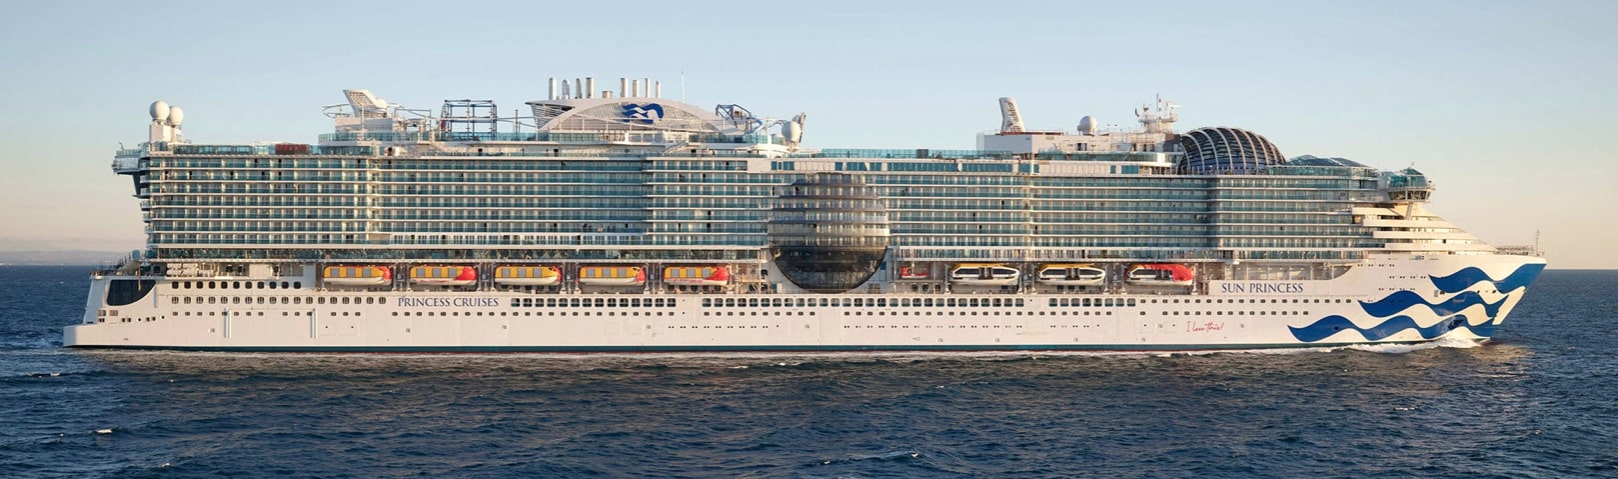 SUN PRINCESS CRUCEROS SUN PRINCESS CRUISES NEW SHIP NEW SUN PRINCESS CRUCEROS SUN PRINCESS CRUCEROS MEDITERRANEO CRUCEROS CARIBE CARIBBEAN CRUISES SUN PRINCESS #SunPrincess #CrucerosMediterraneo #MediterraneanCruises #CaribbeanCruises #PrincessCruises #NewCruiseShip #Cruises #NewShip #SphereClass #Princess #CrucerosPrincess #MundomarCruceros #CrucerosPrincess #Cruceroclick #AgenciaDeViajes #Bidaiak #Creuers